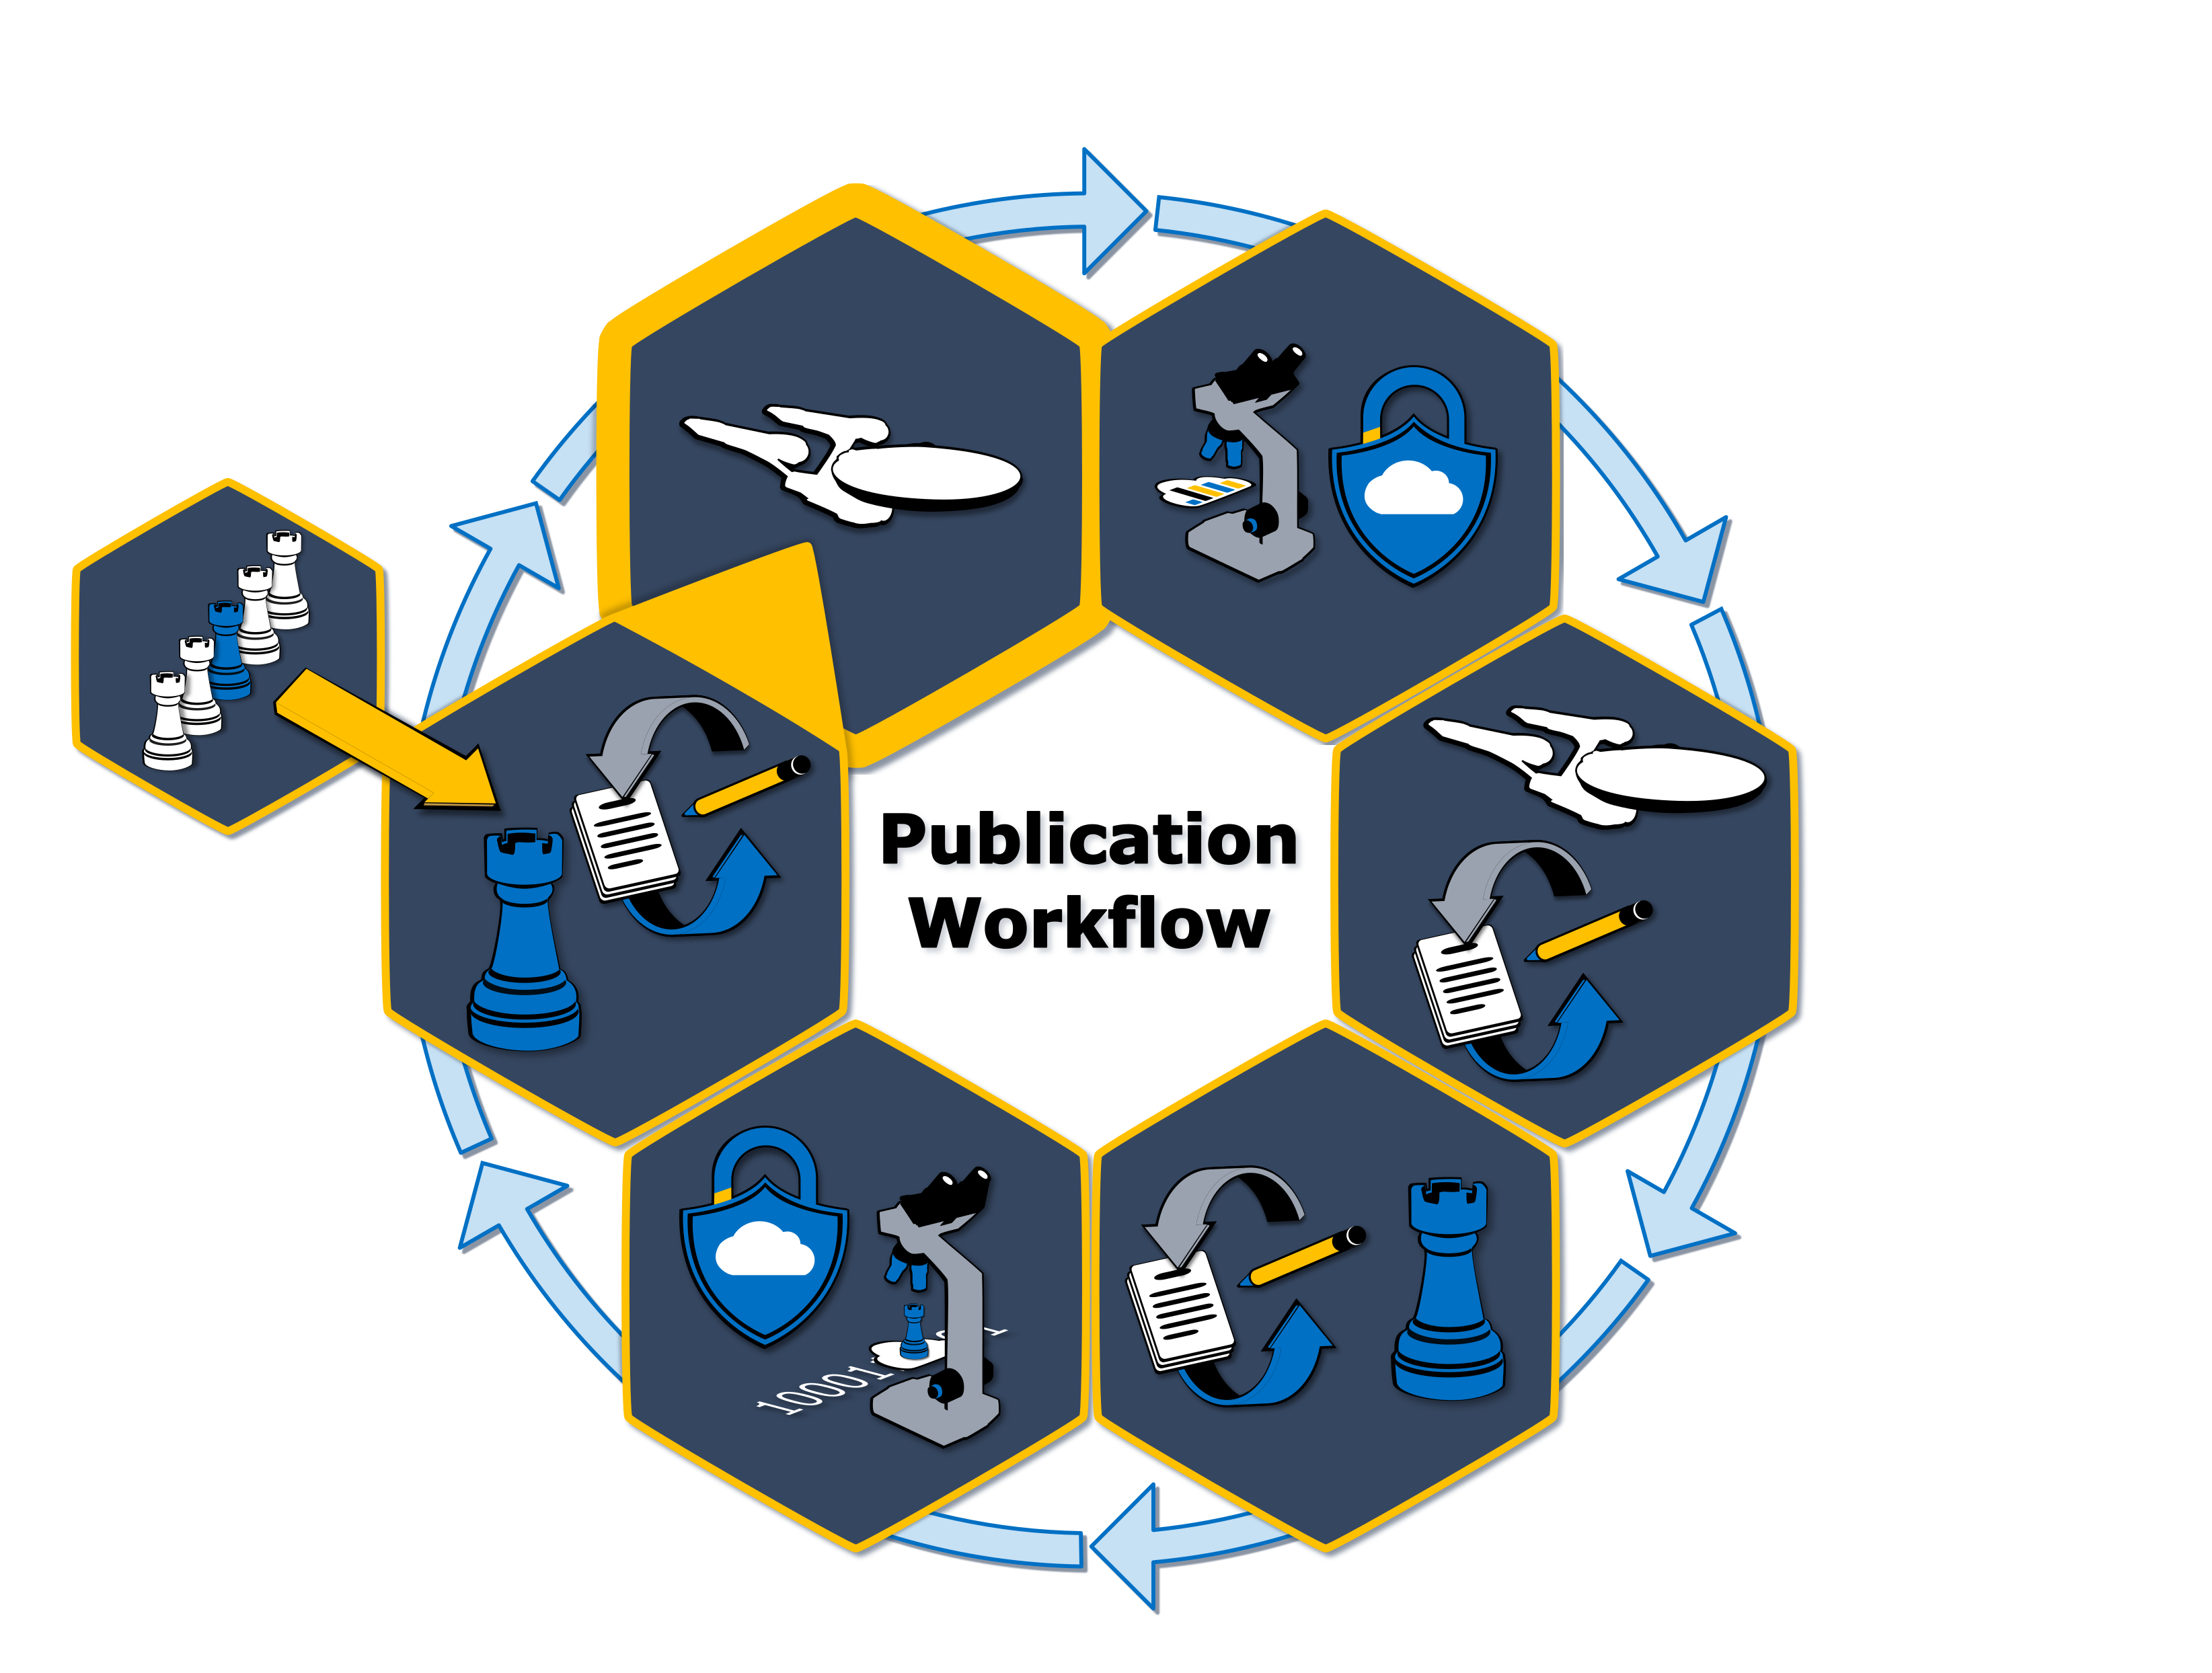 Publication Workflow